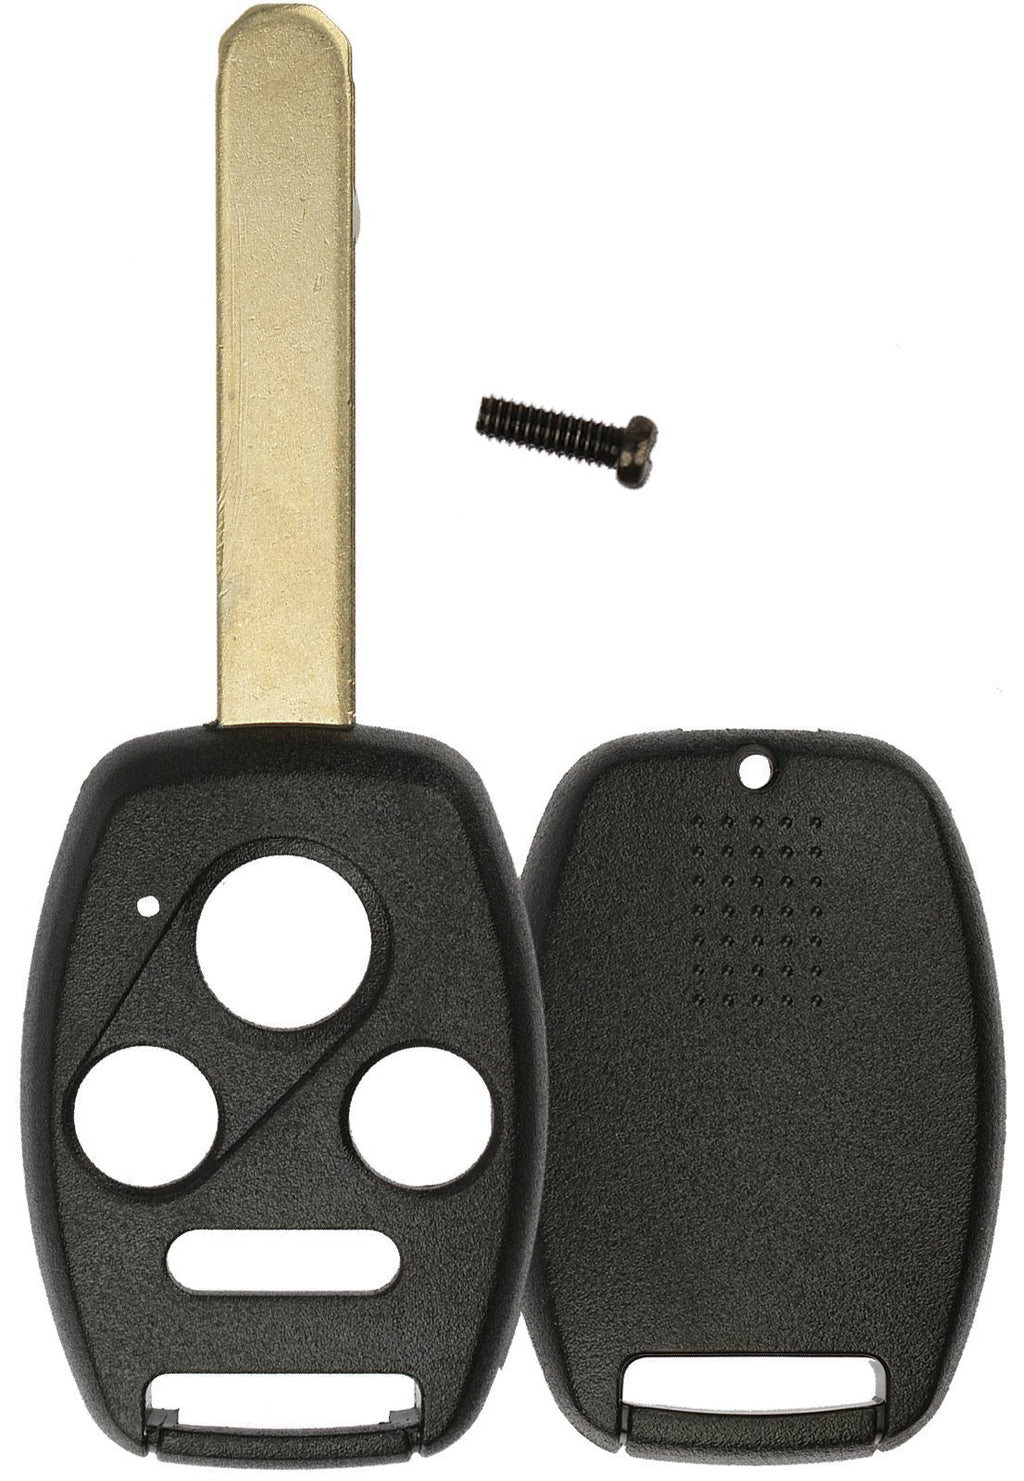  [AUSTRALIA] - KeylessOption Just the Case Keyless Entry Remote Key Fob Shell Cover Blade For Honda Accord CR-V black